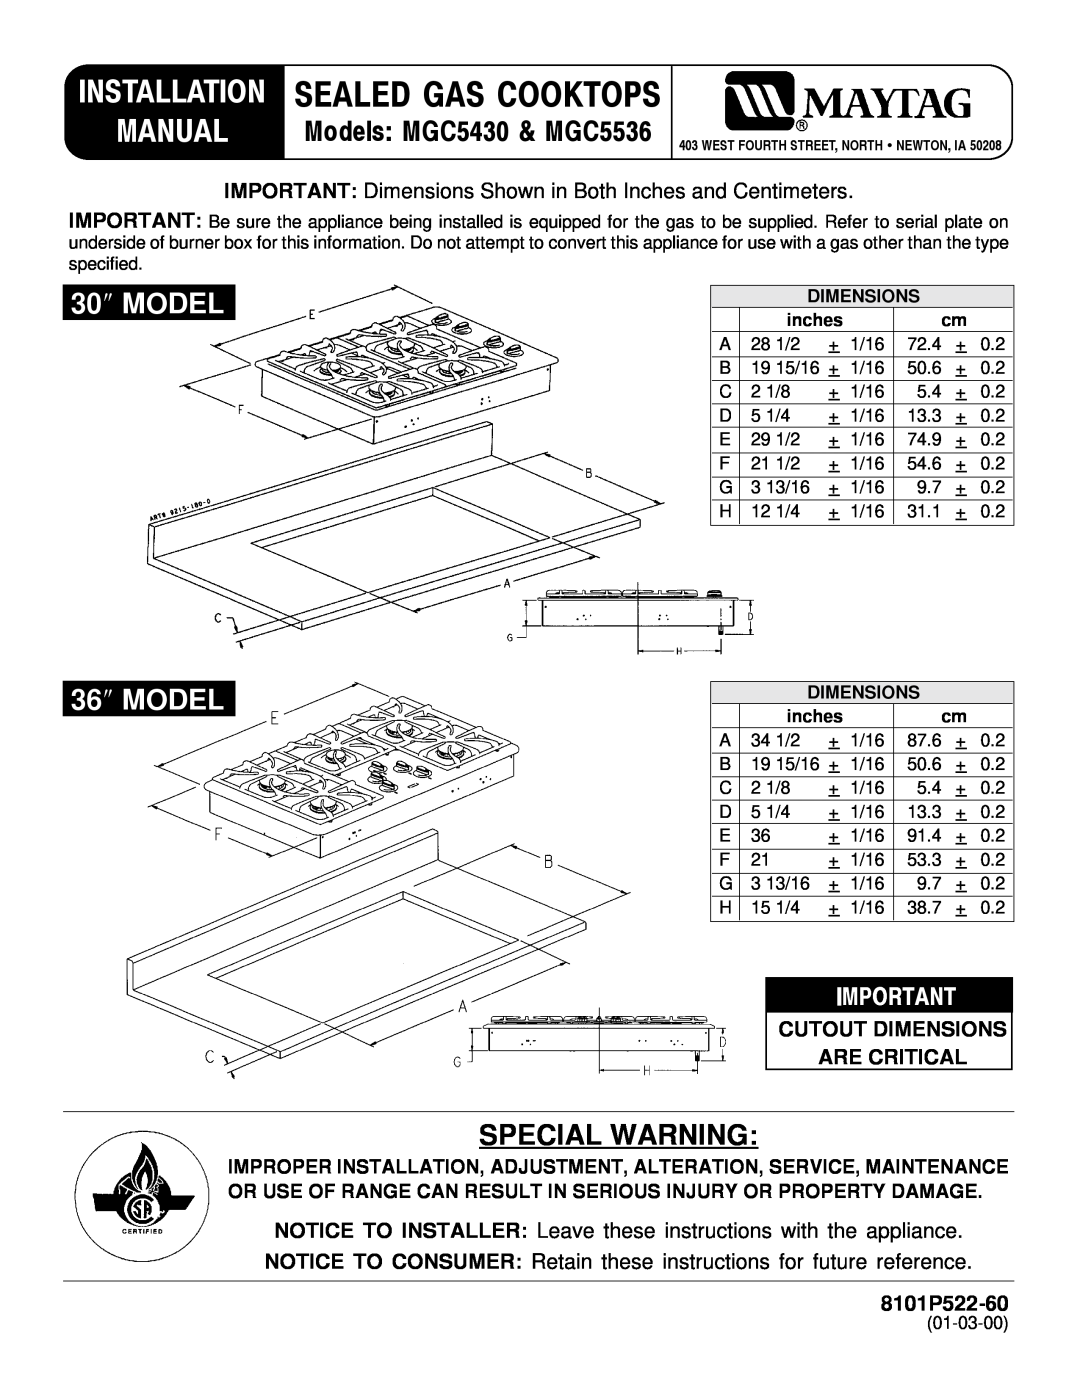 Maytag MGC5536 installation manual Manual, MODEL 36 MODEL, Special Warning, Cutout Dimensions Are Critical, 8101P522-60 